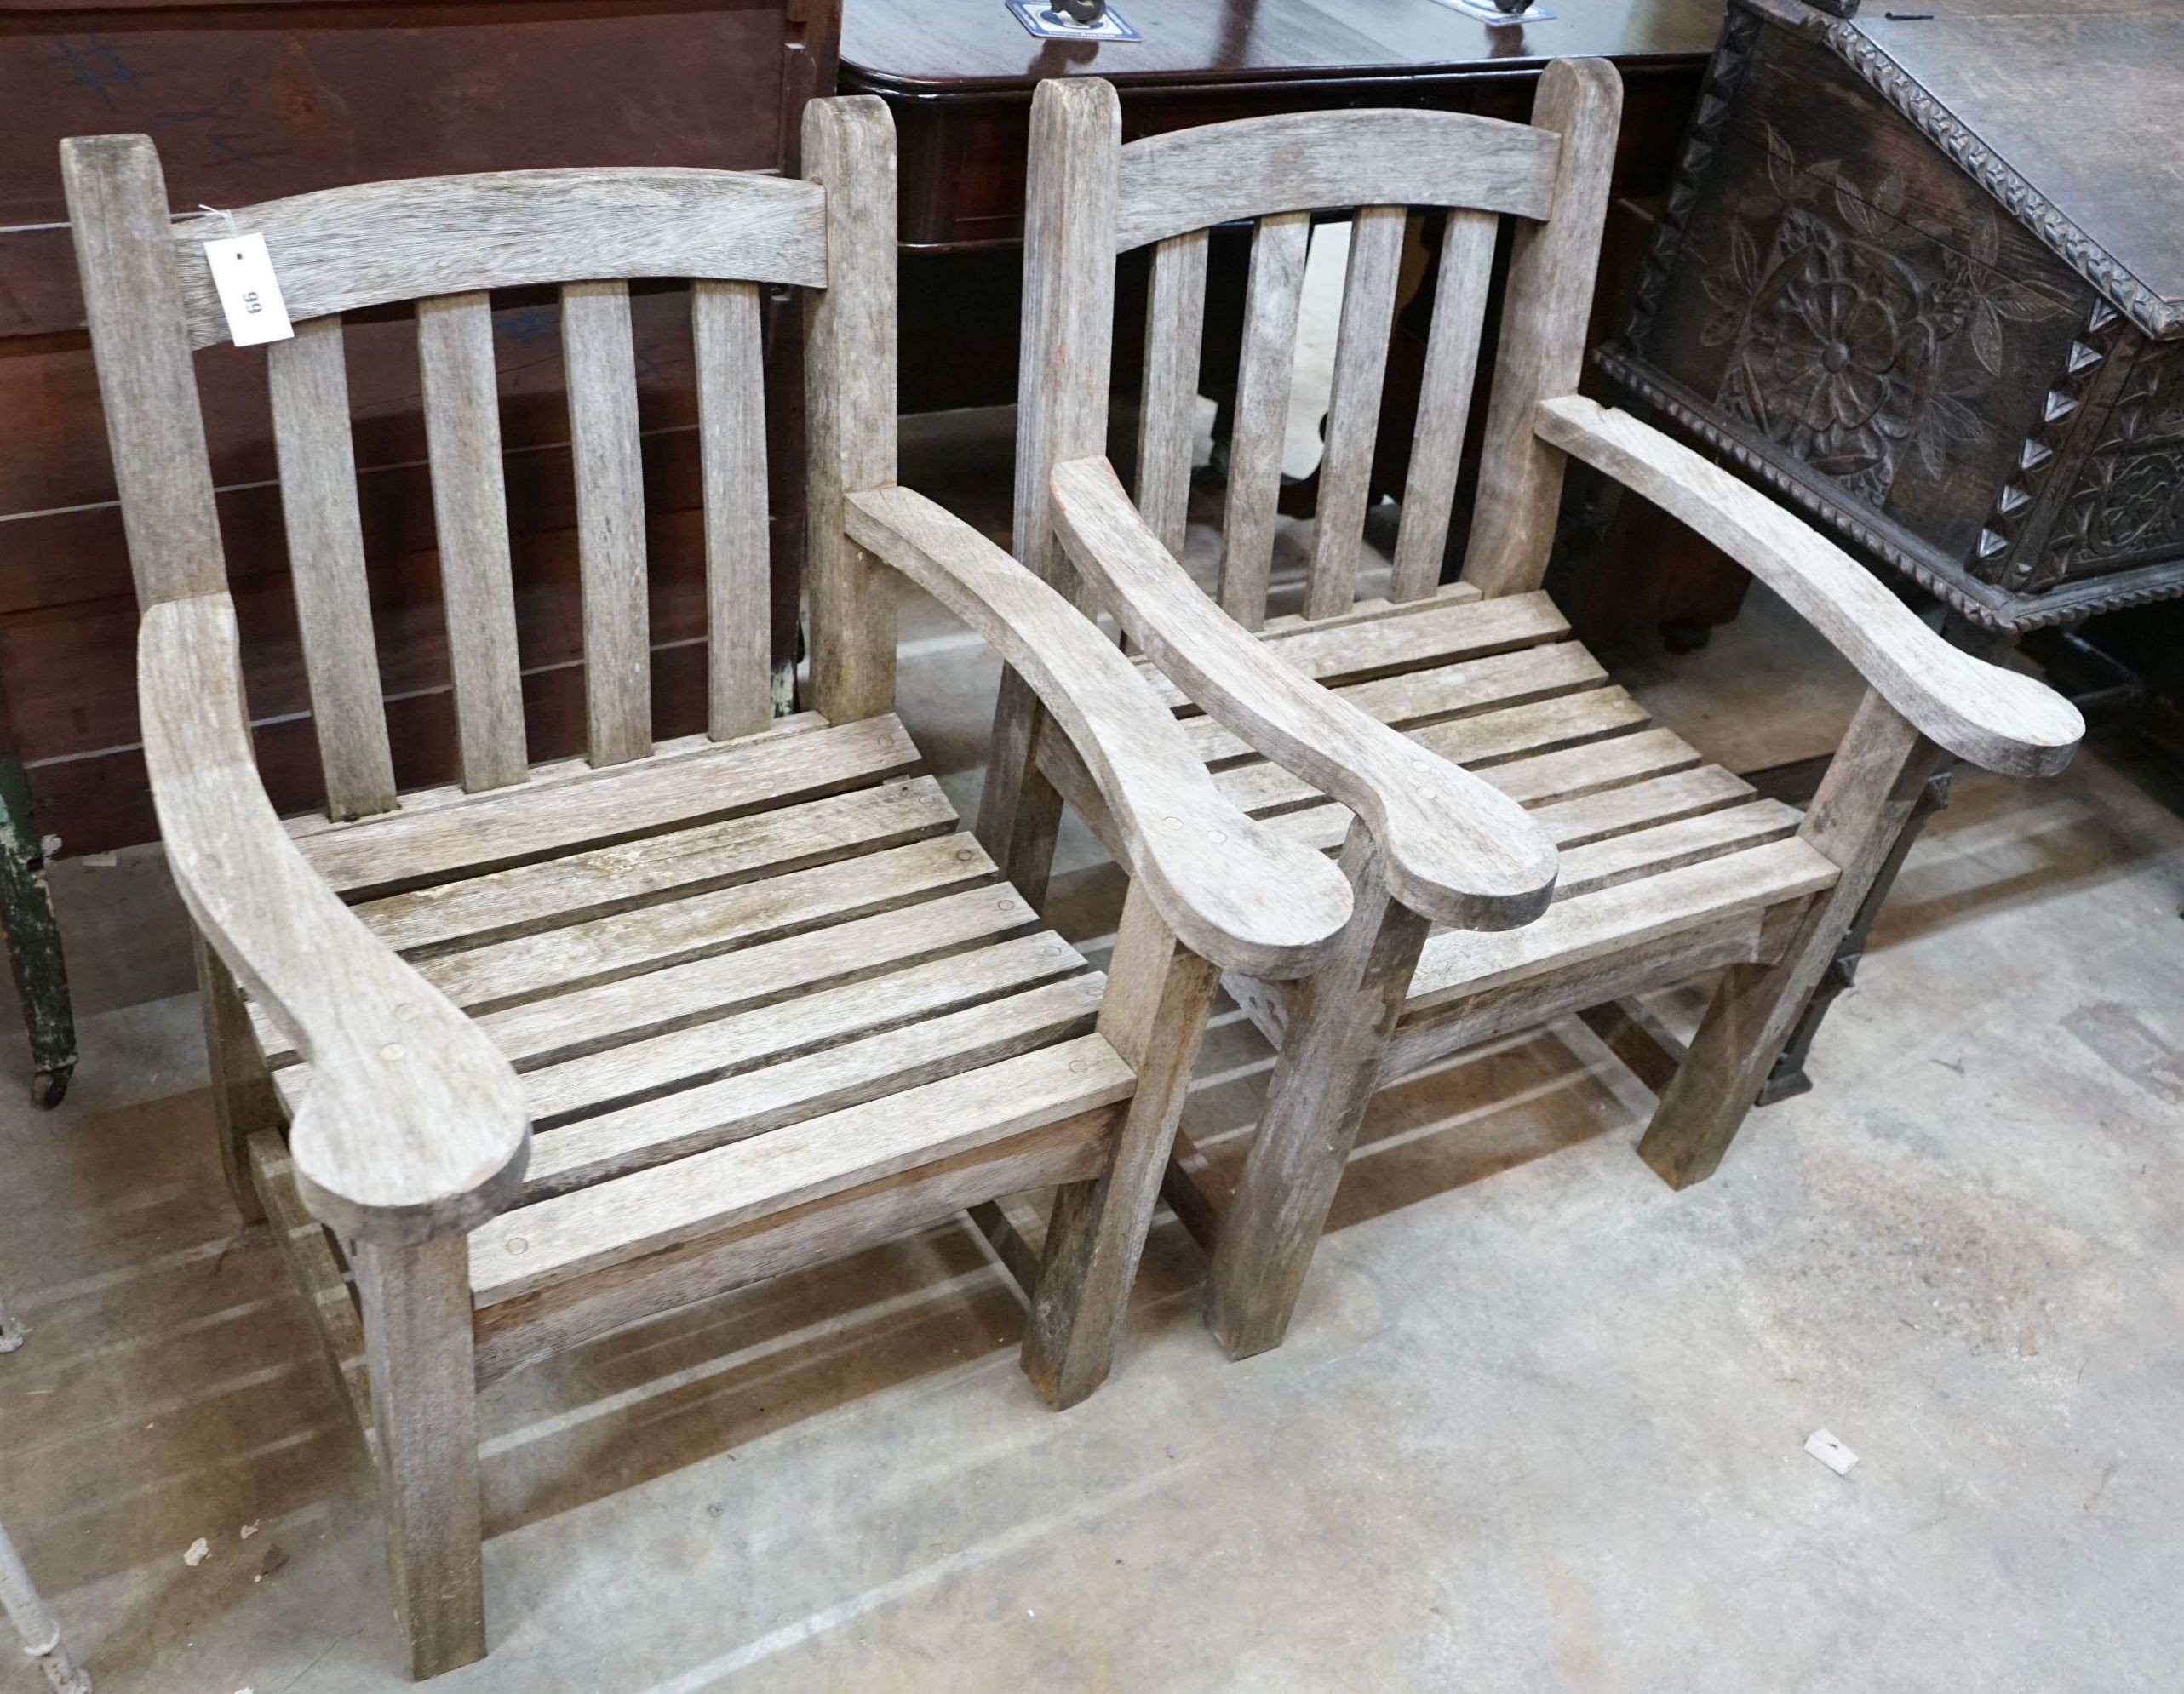 A pair of weathered teak garden armchairs, width 65cm, depth 58cm, height 87cm